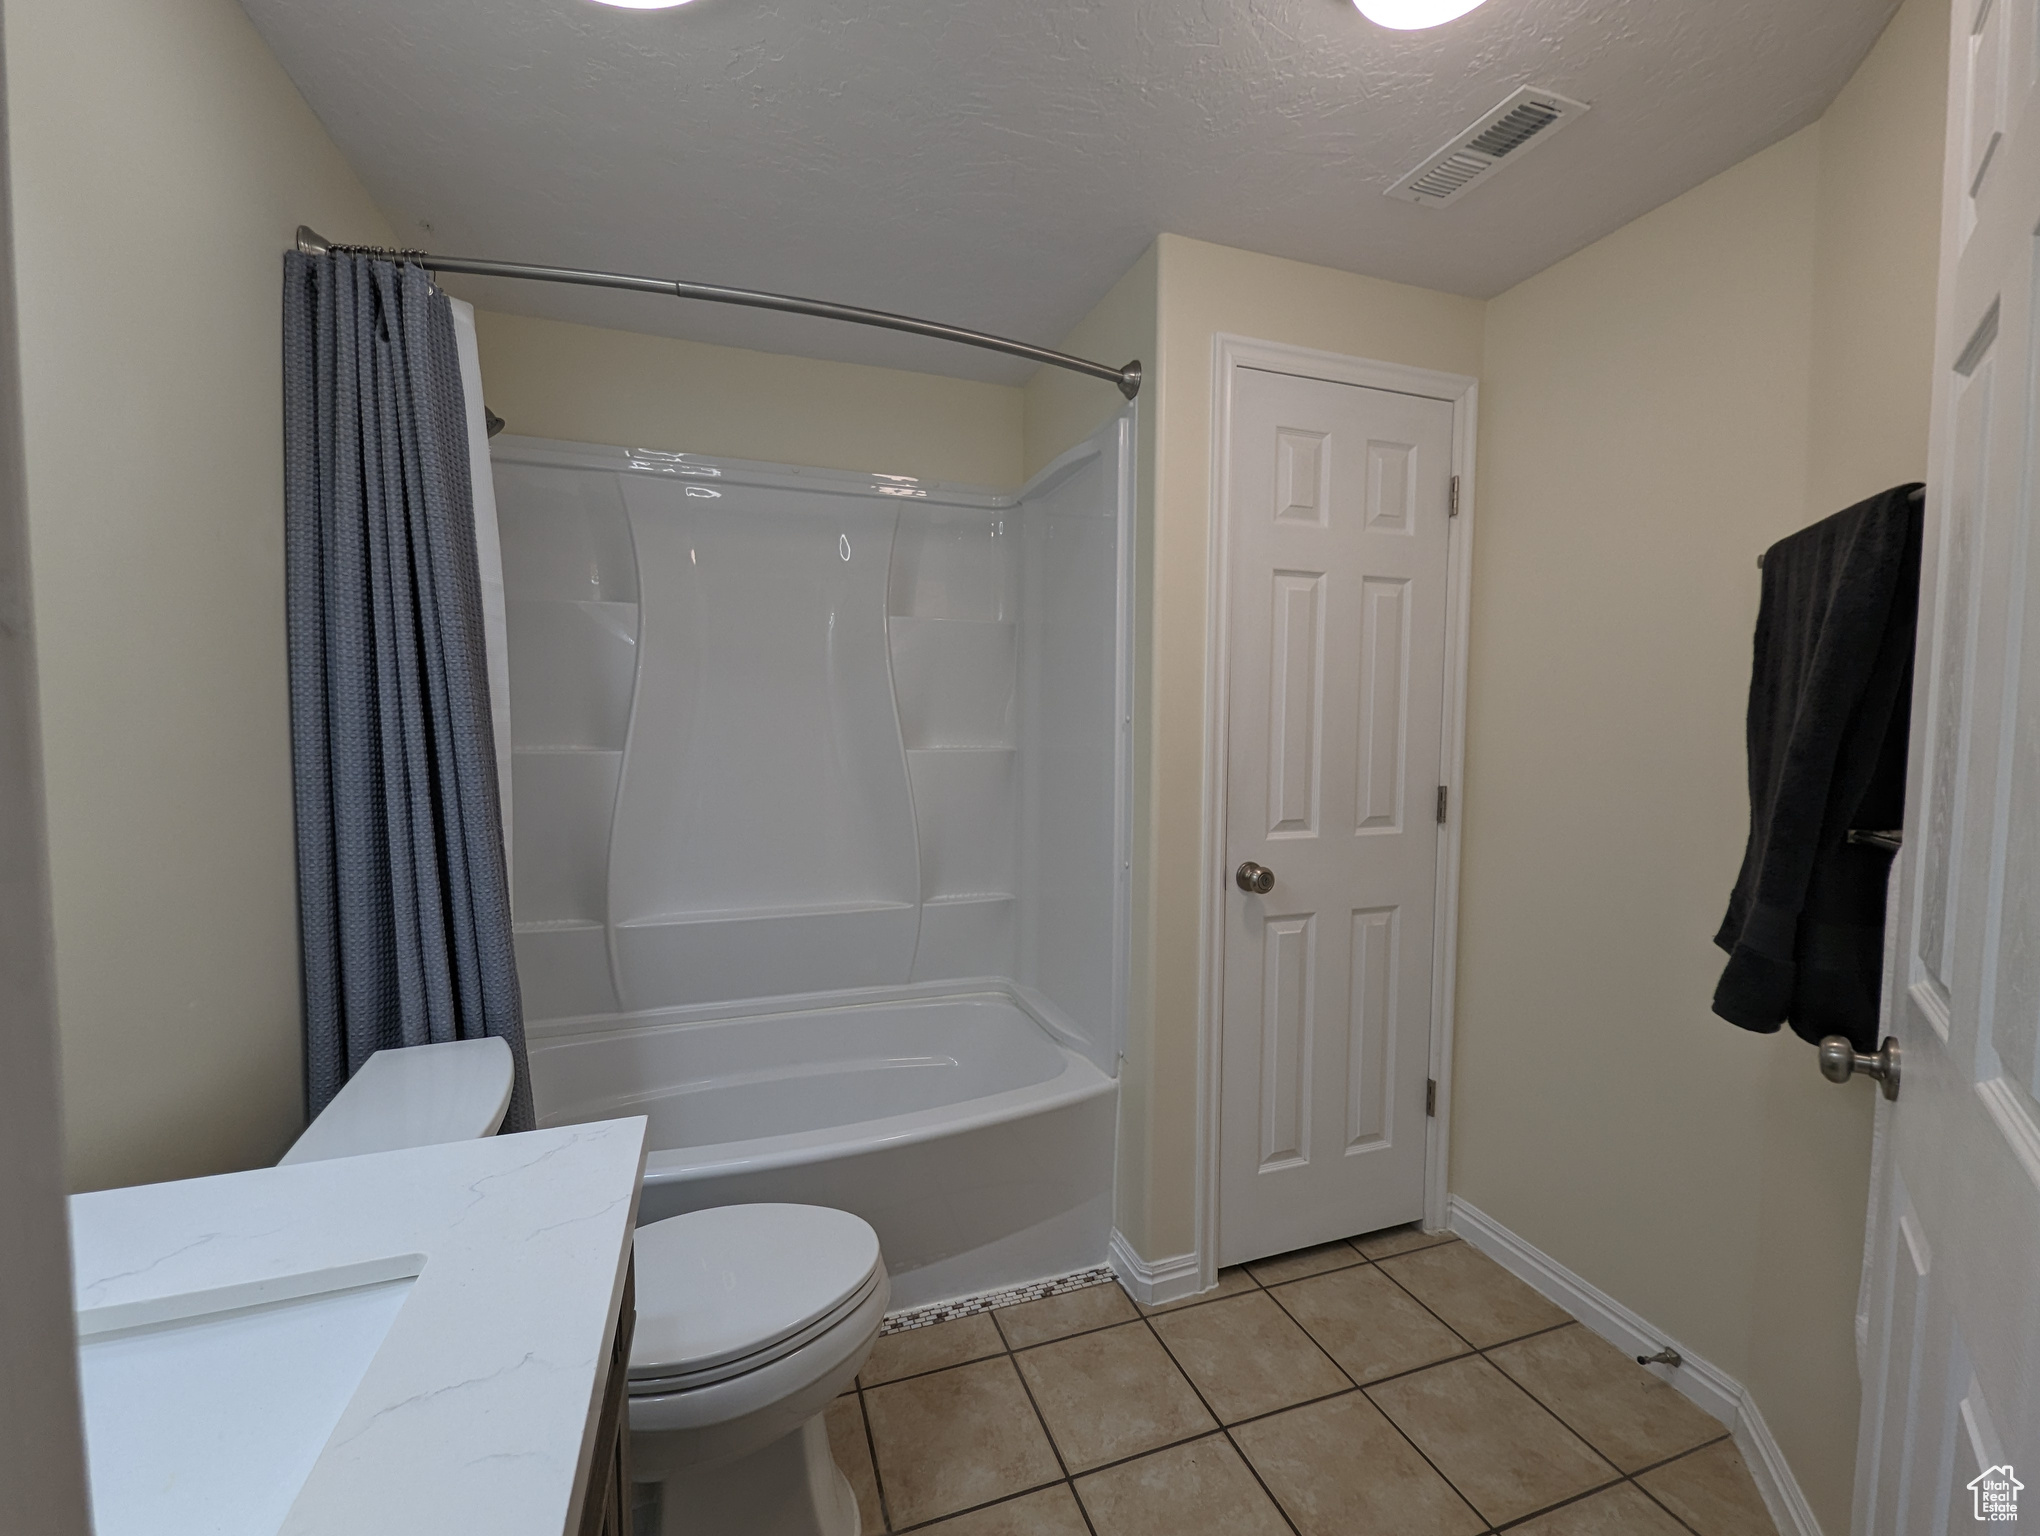 Full bathroom featuring vanity, shower / bath combo, tile floors, and toilet